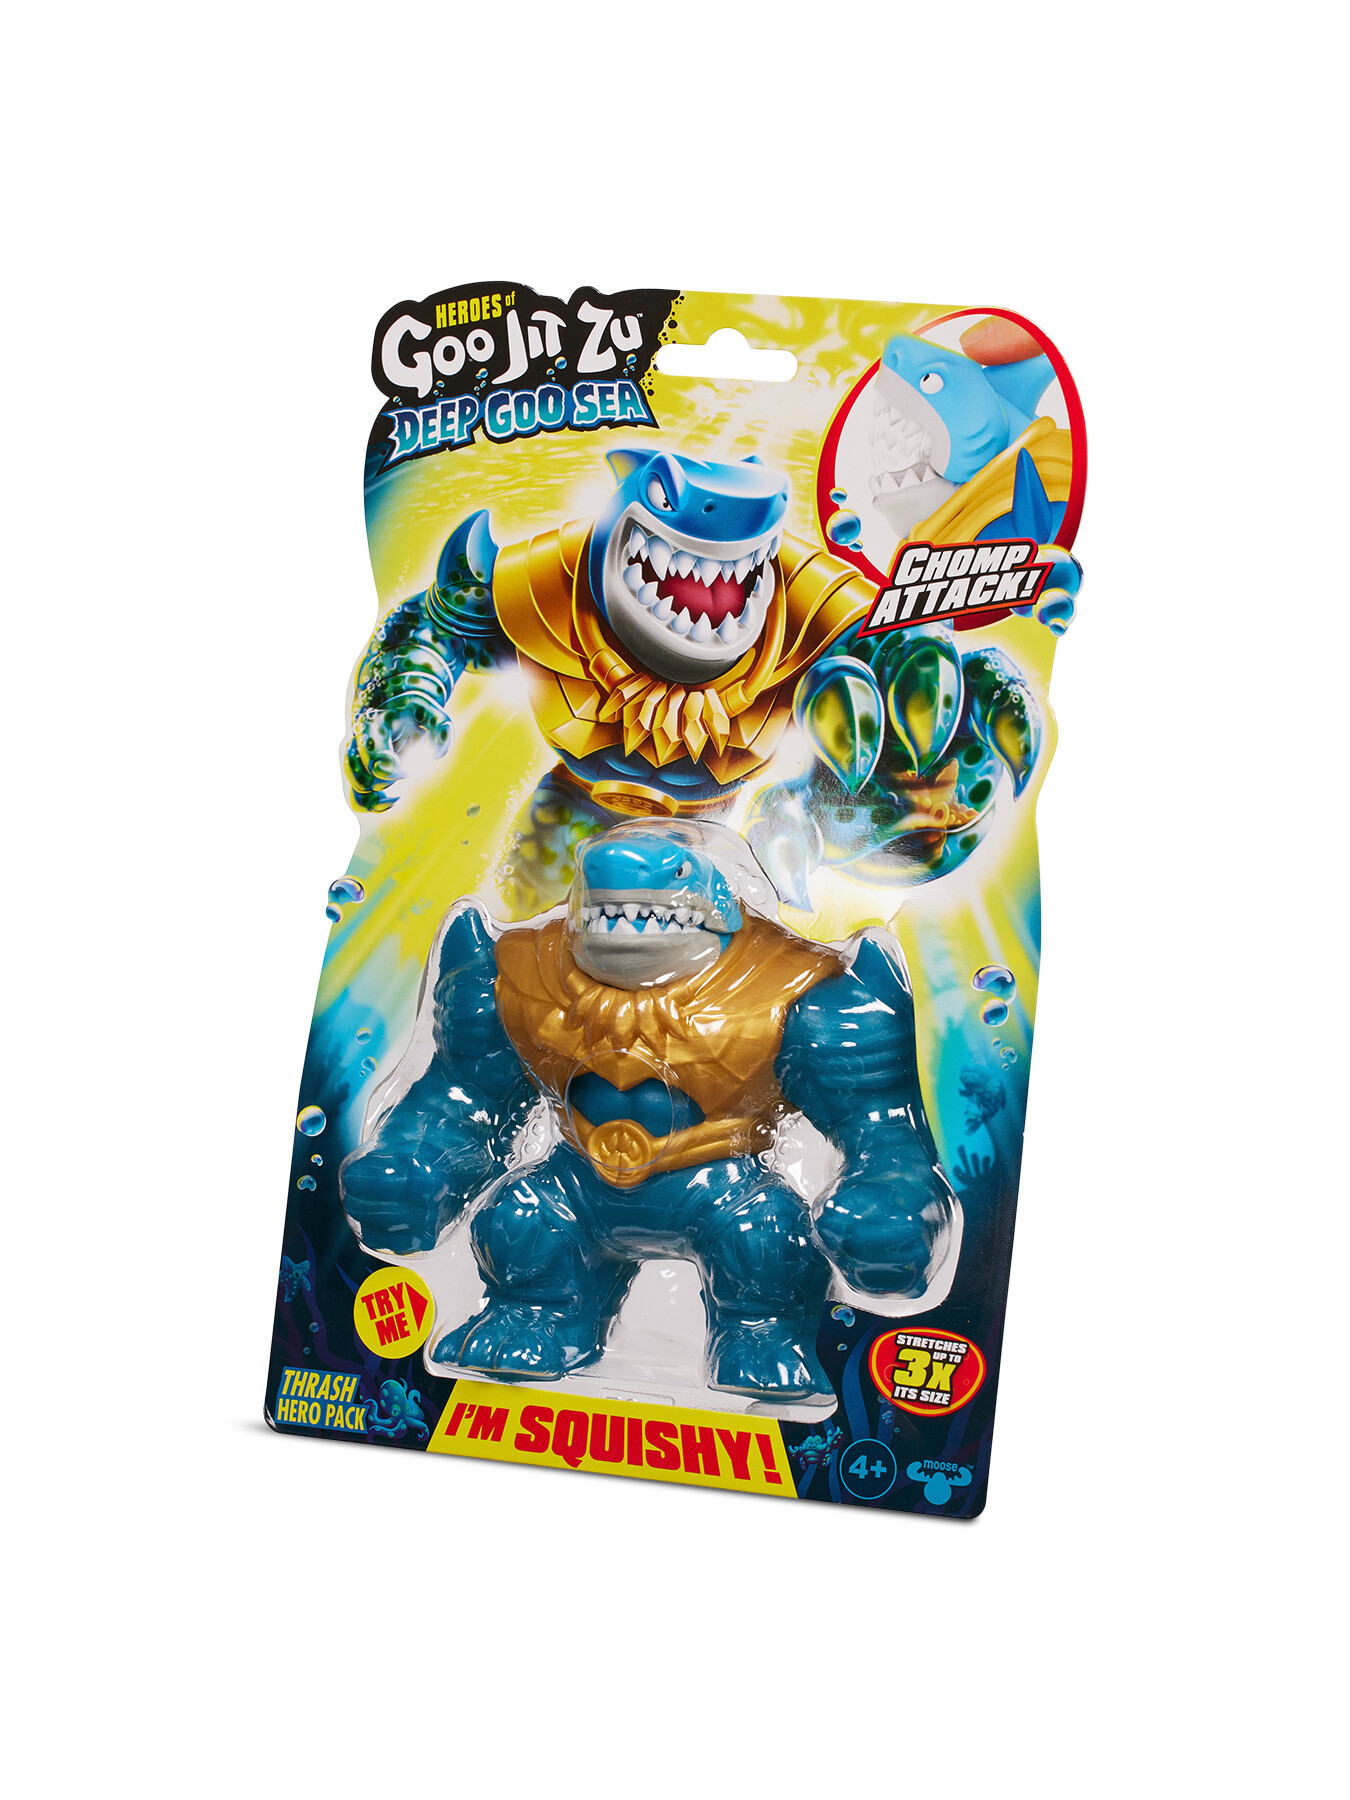 Heroes of Goo Jit Zu Toys & More! // Toyshnip – ToyShnip